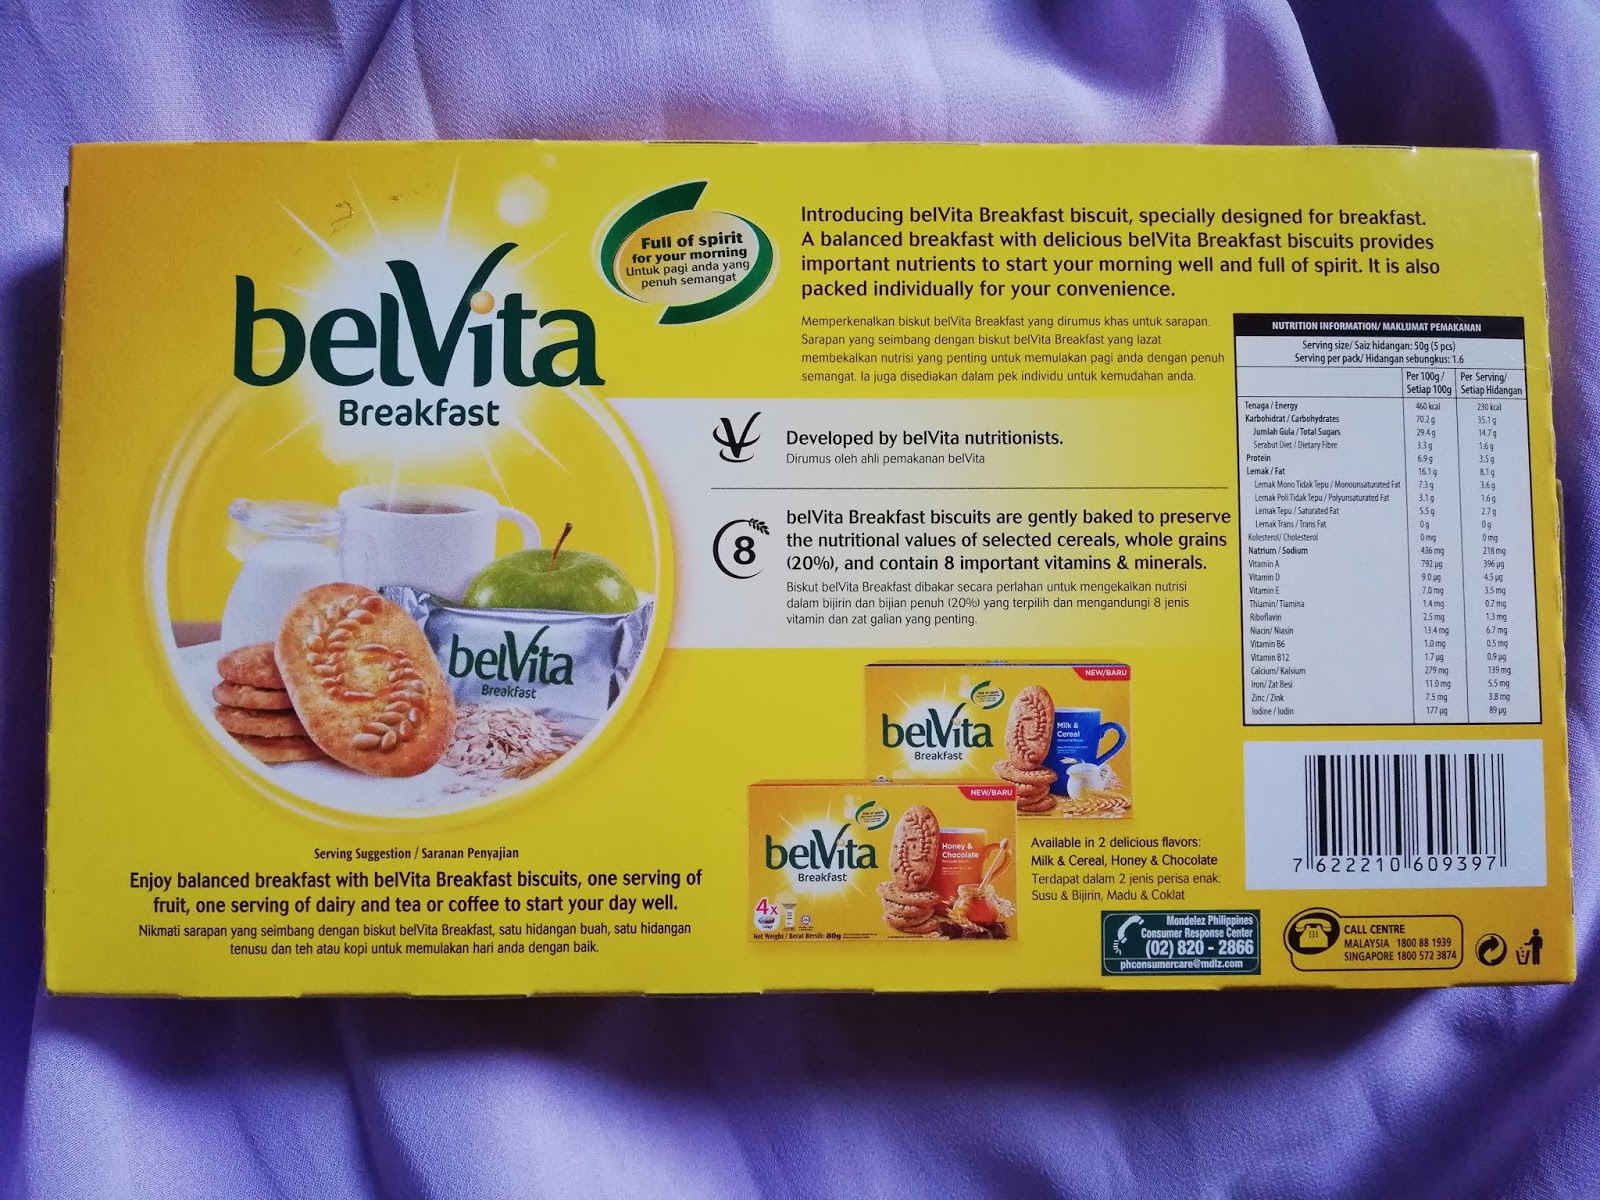 Belvita bar nutrition